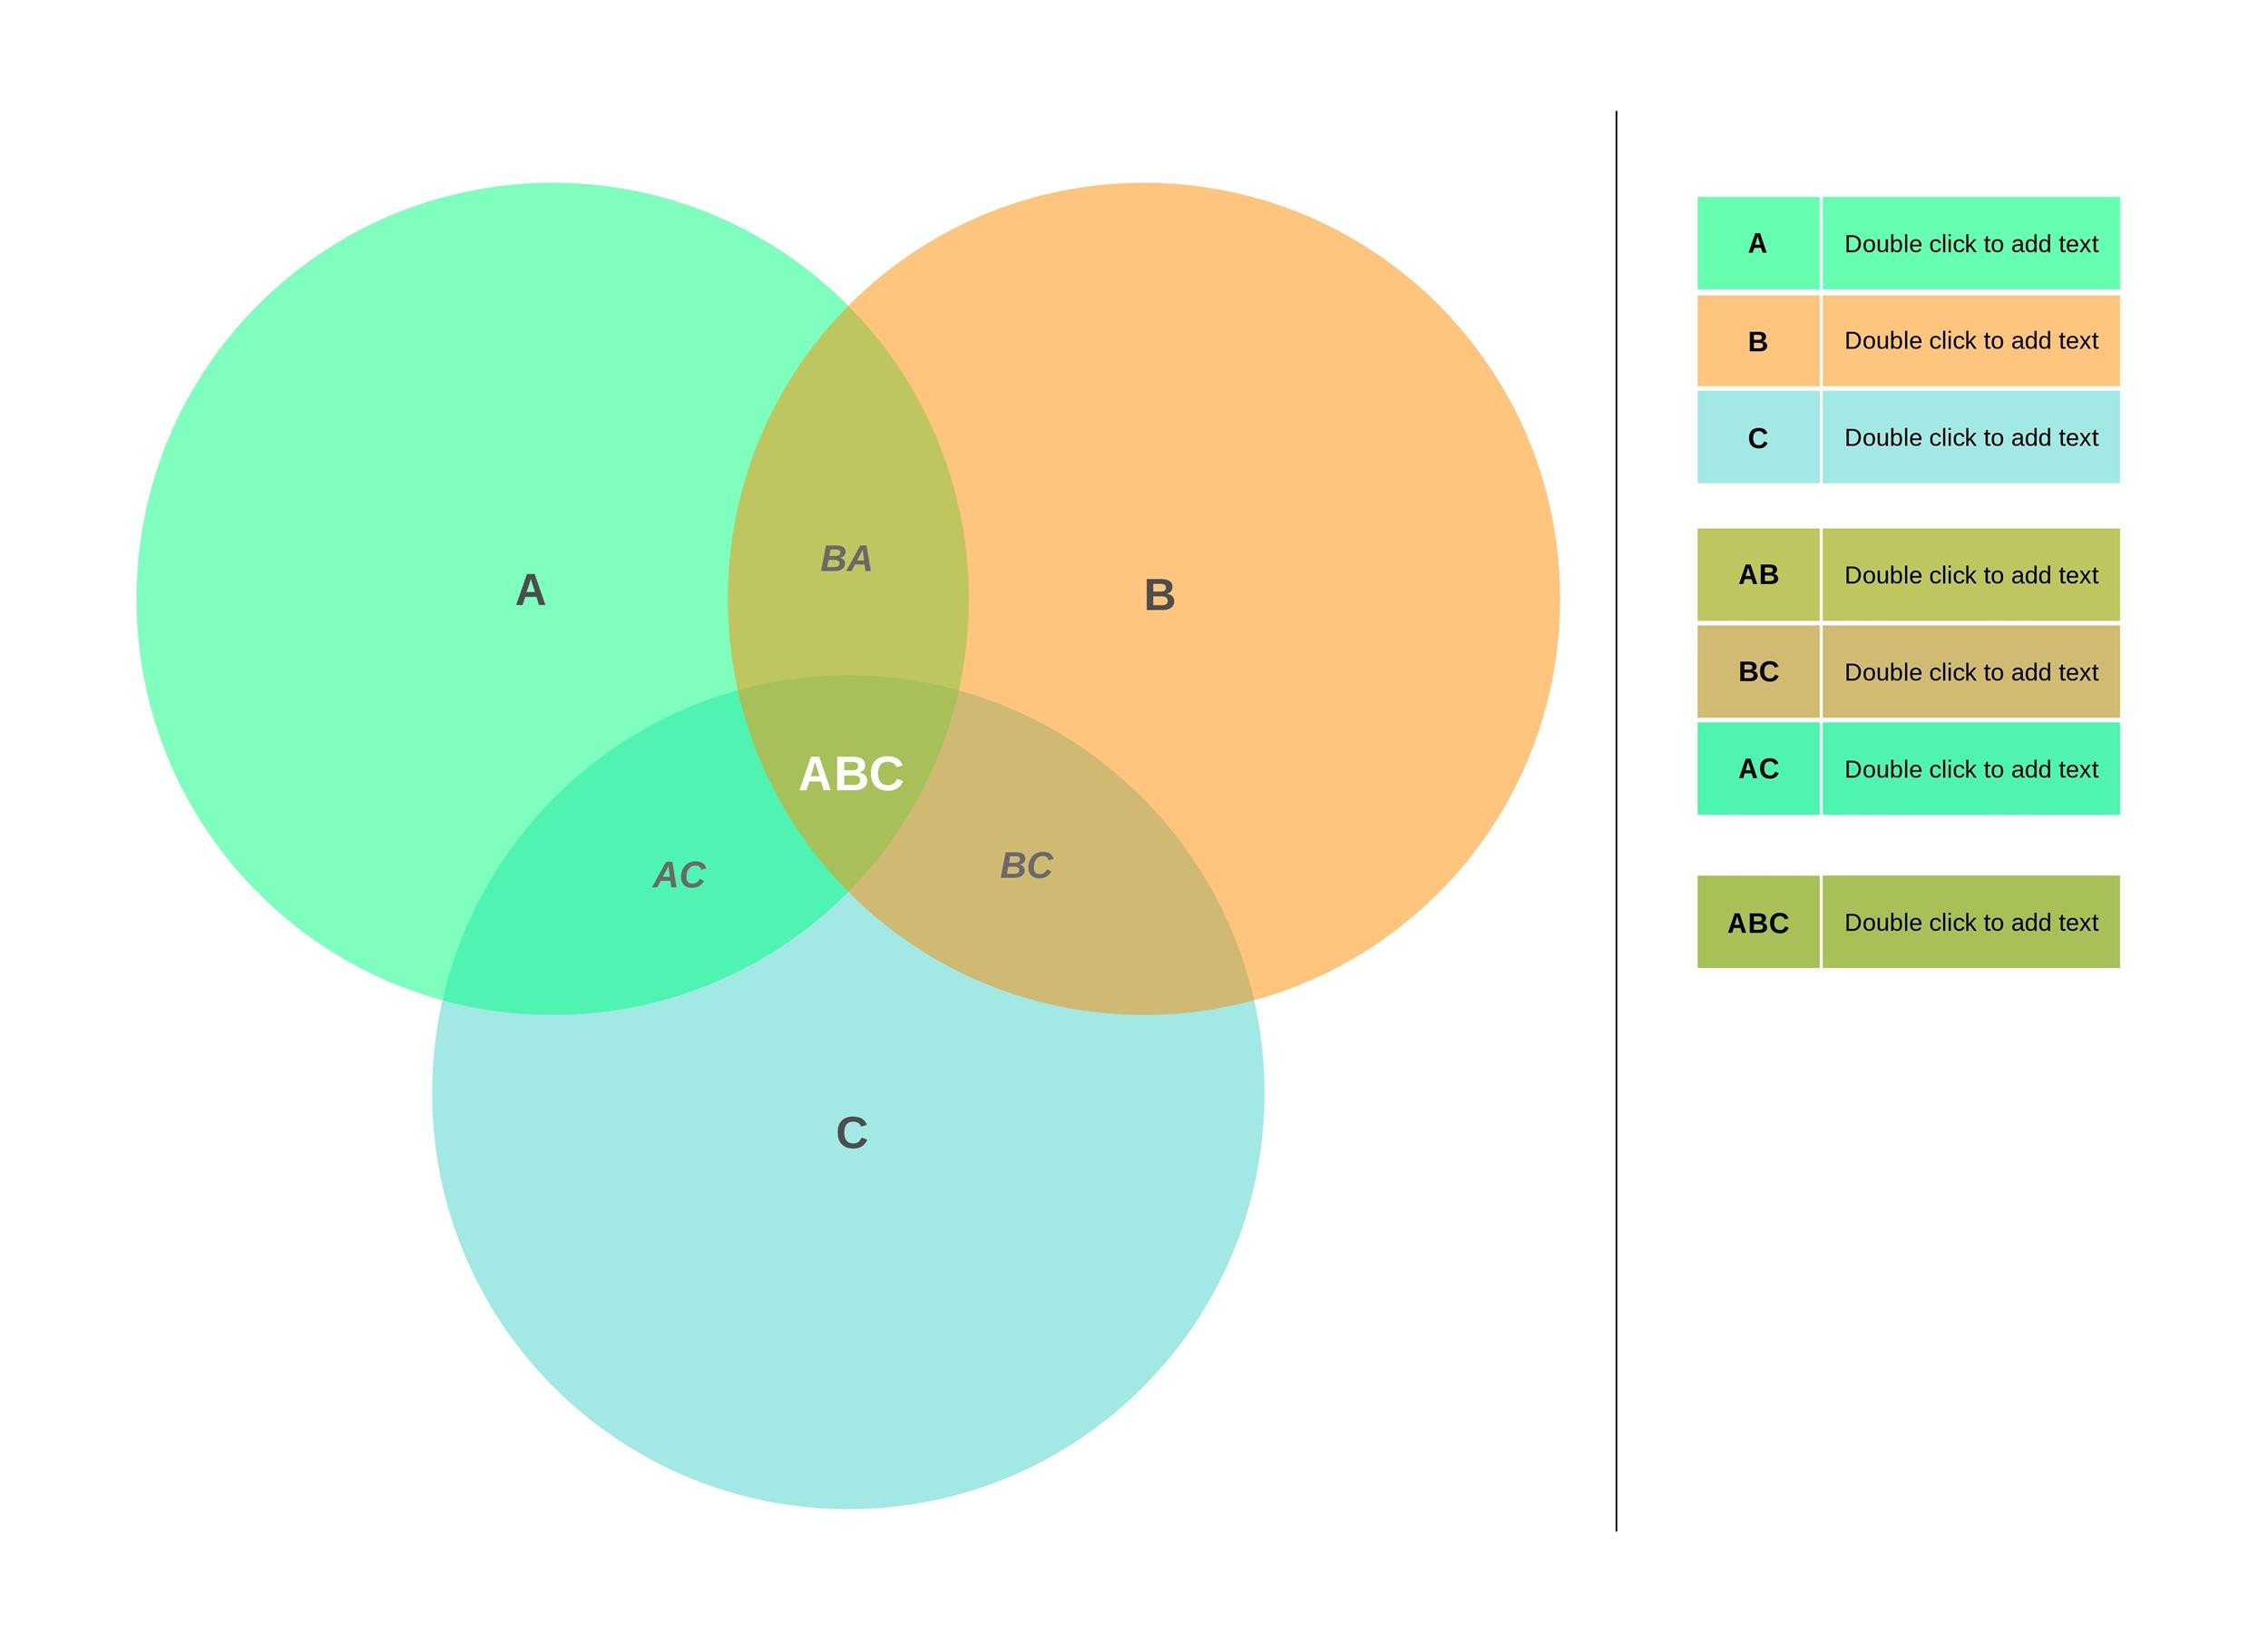 40+ Free Venn Diagram Templates (Word, PDF) ᐅ TemplateLab